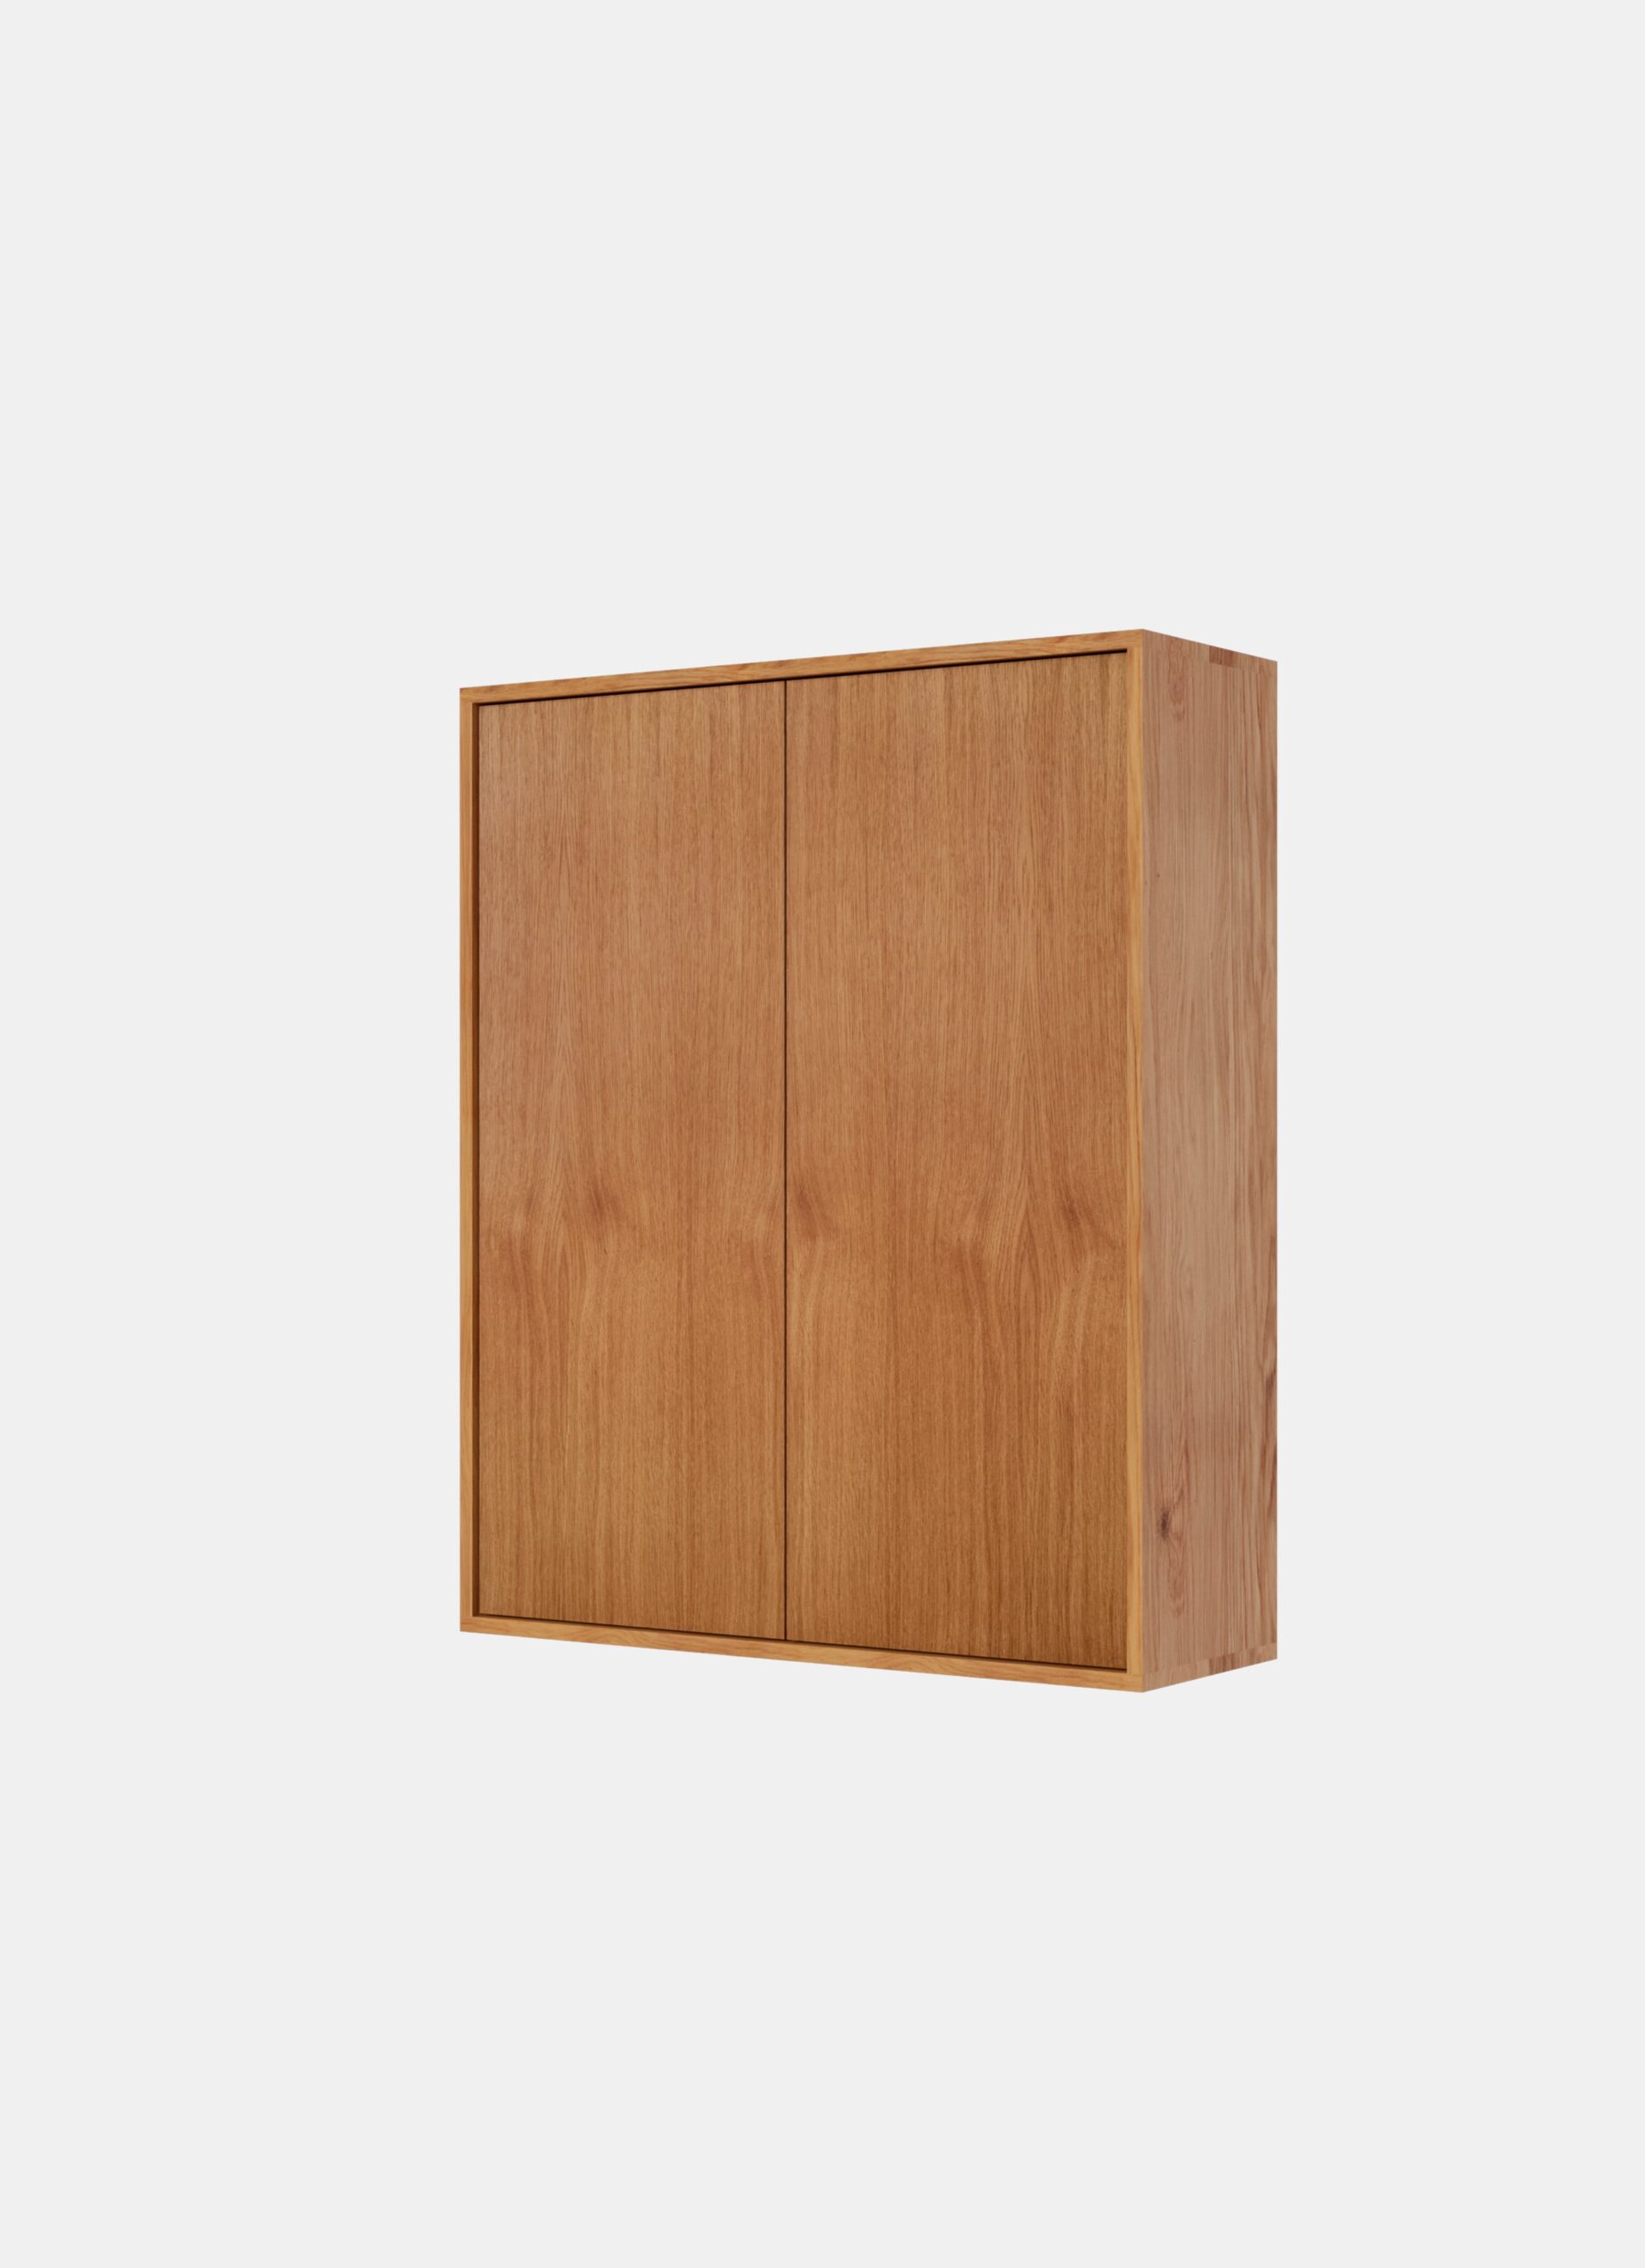 Frama - Shelf Library Cabinet - Natural Oak - Large